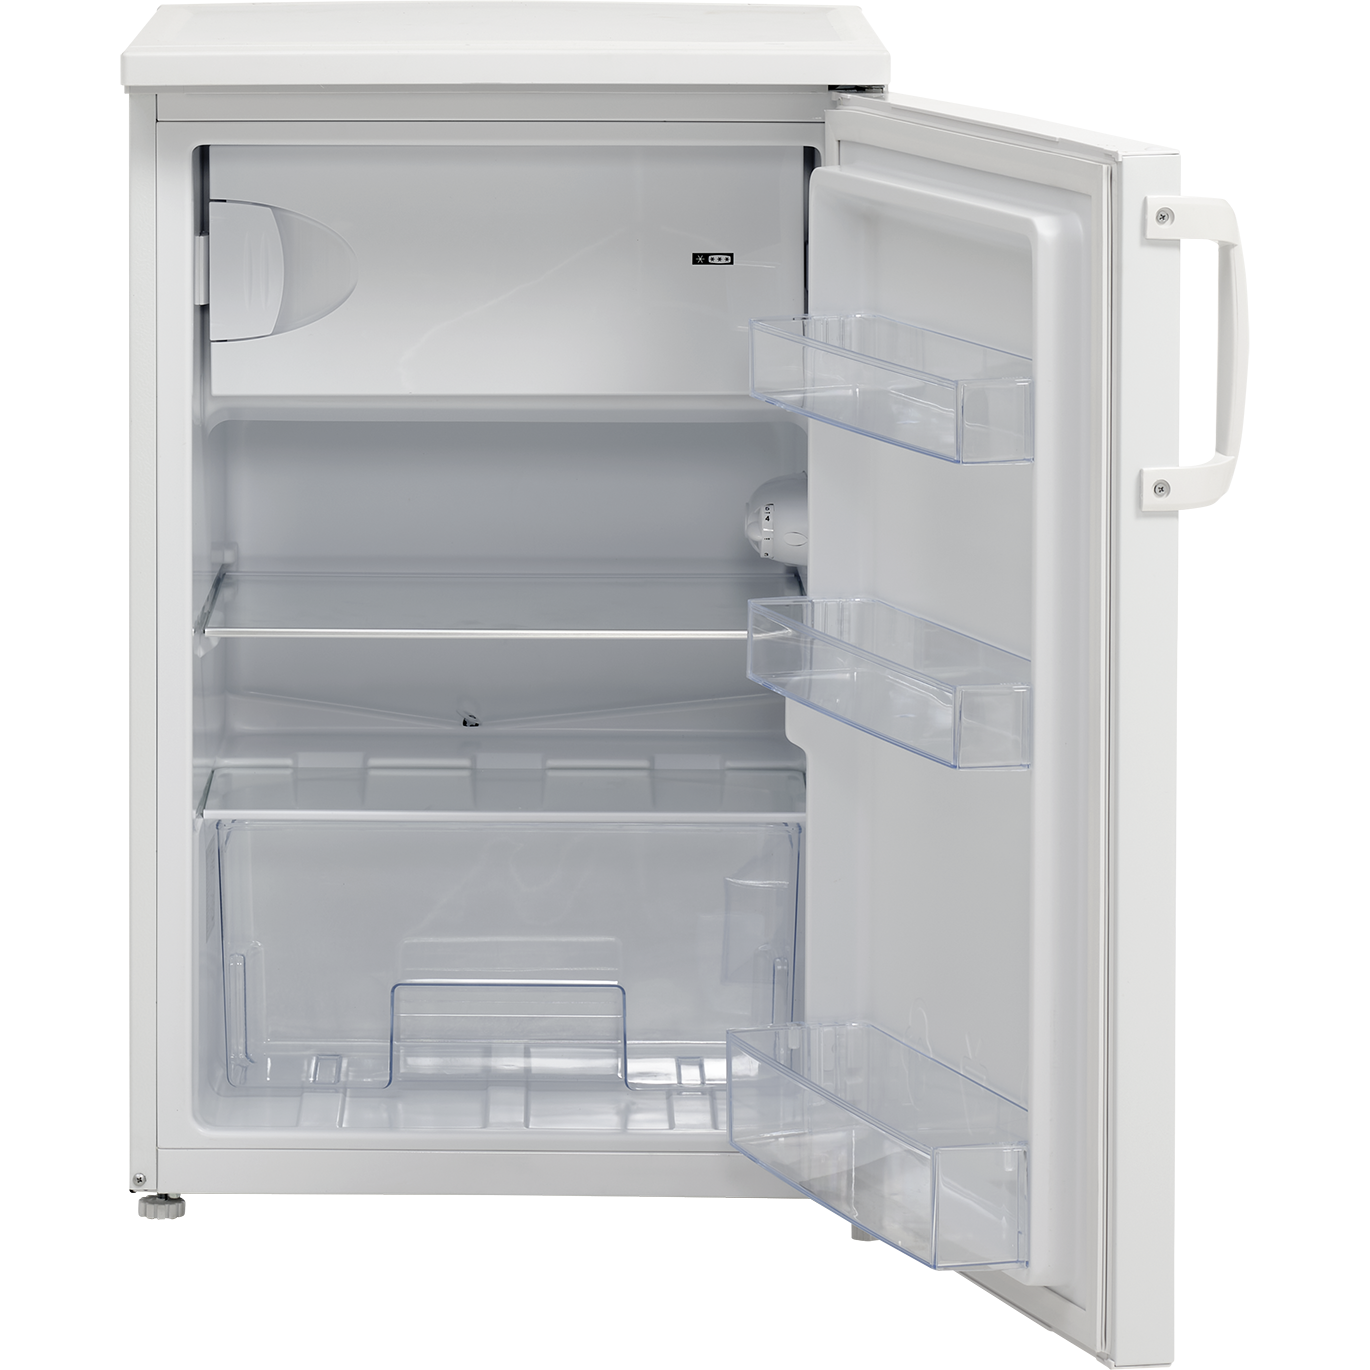 Scandomestic SKB 119 W - Fritstående køleskab med fryseboks